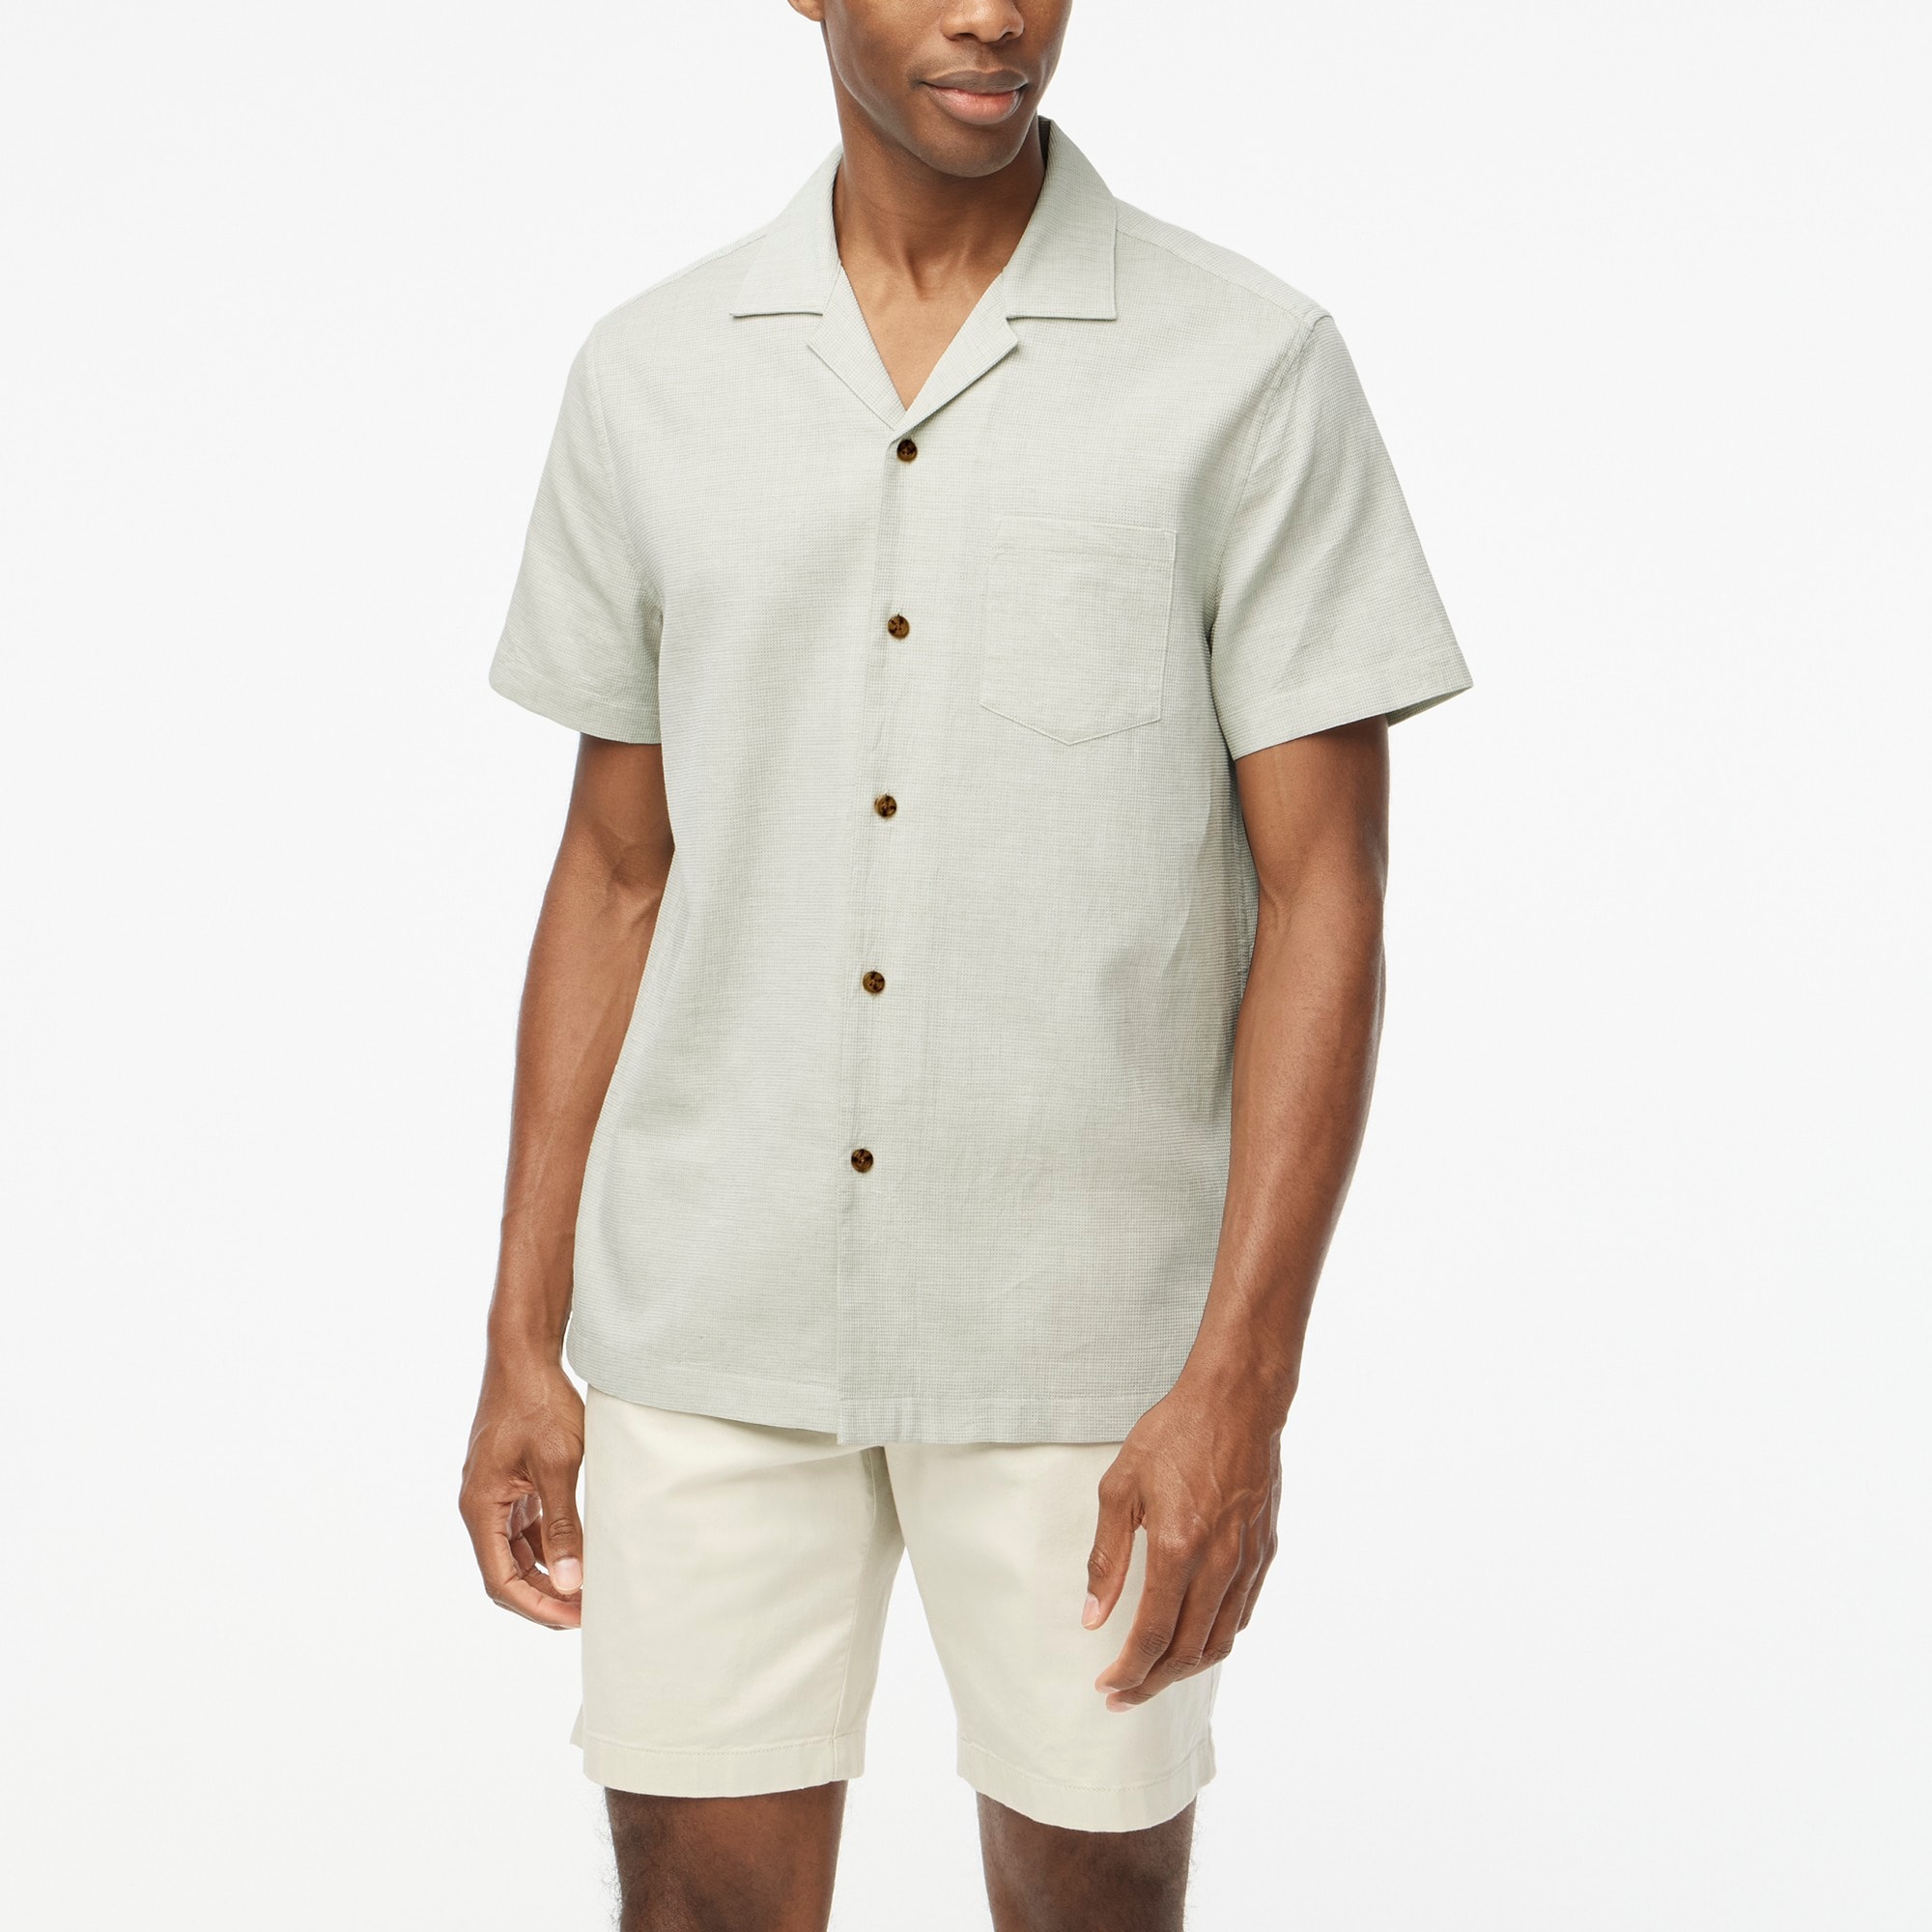  Short-sleeve textured dobby camp shirt